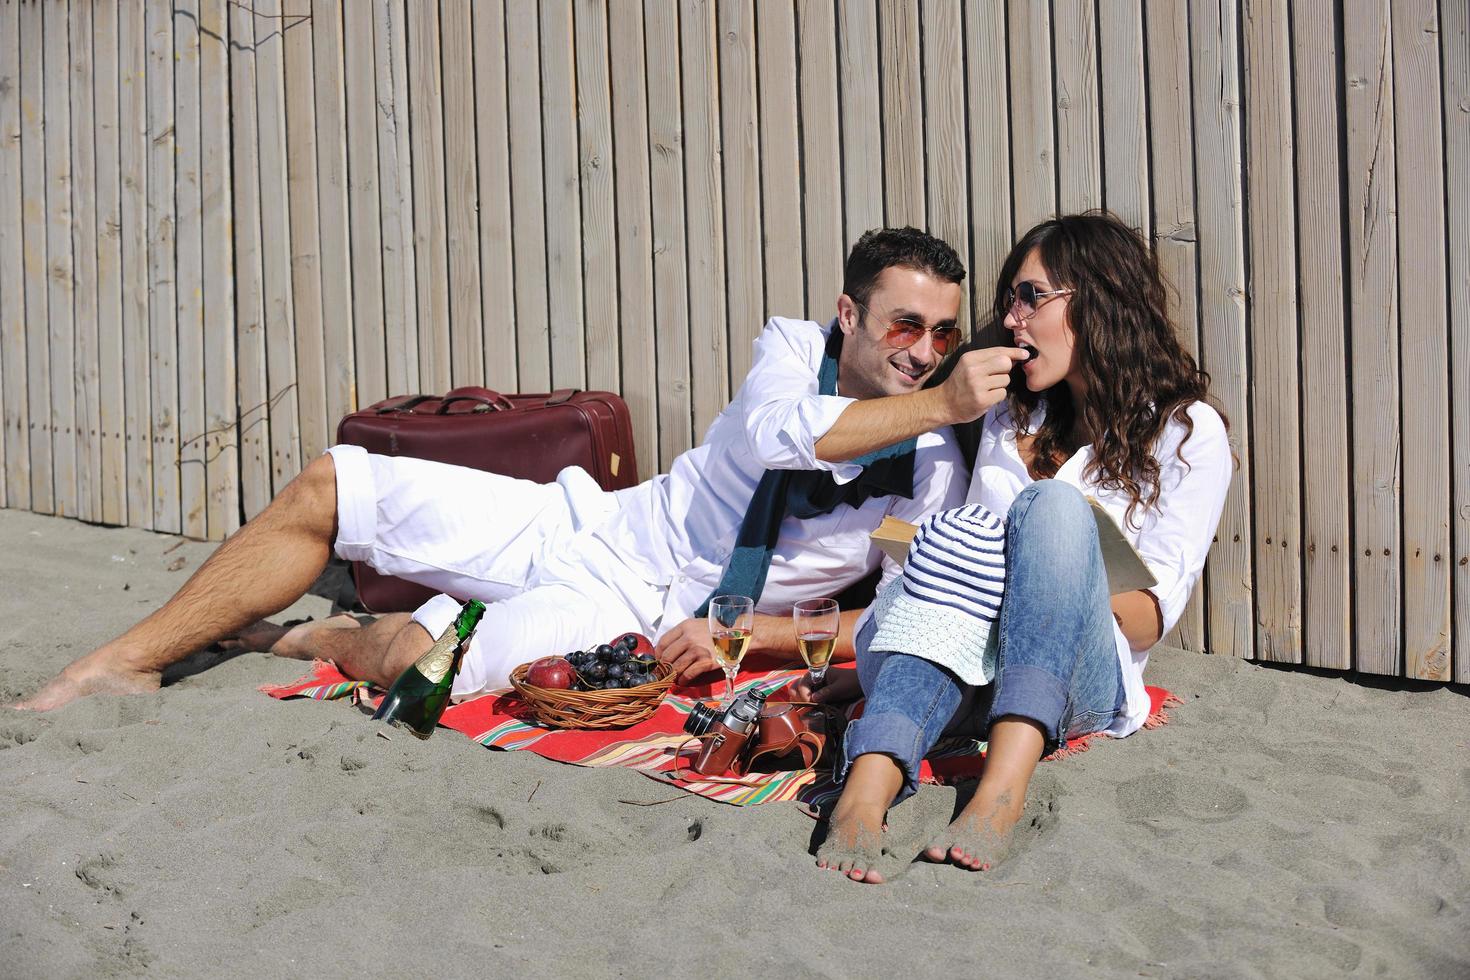 young couple enjoying  picnic on the beach photo